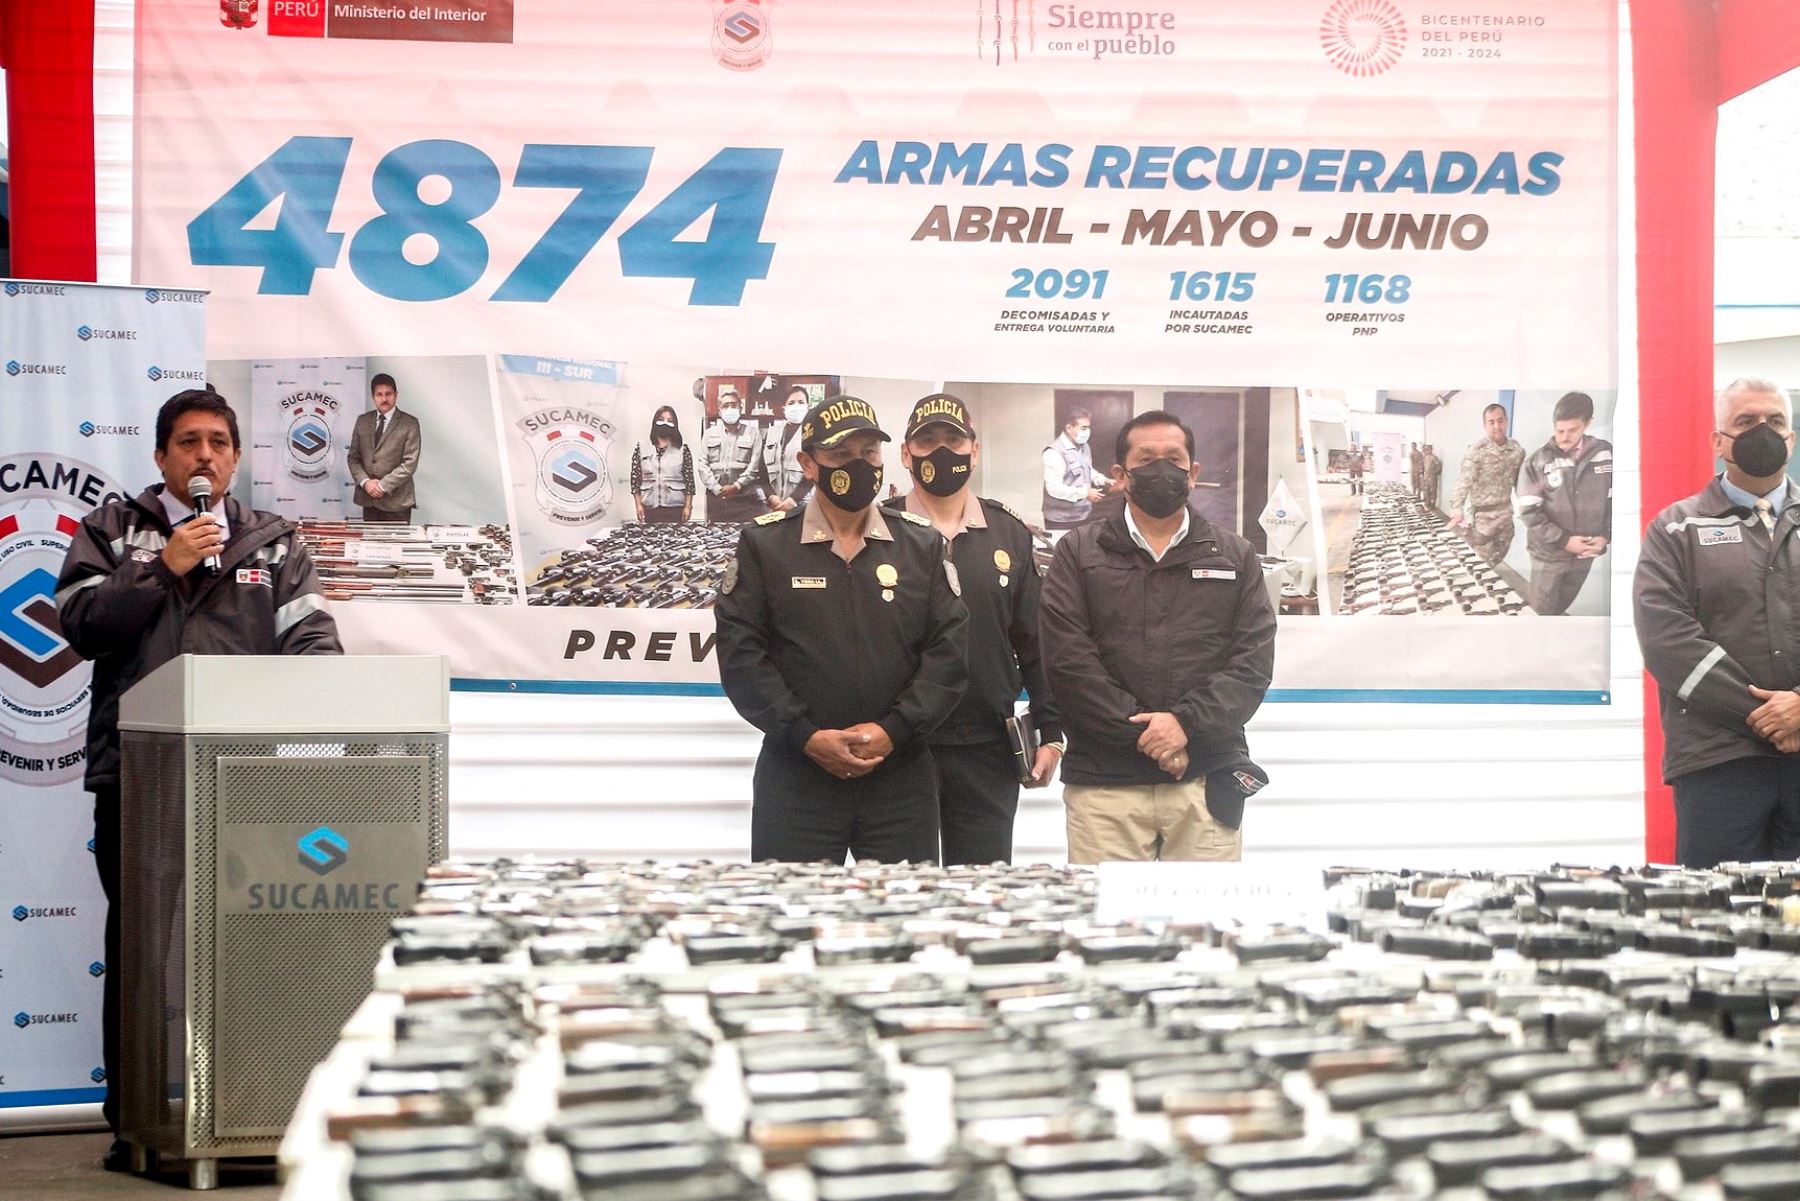 Sucamec presentó 4,874 armas de fuego recuperadas a nivel nacional. Foto: ANDINA/Difusión.